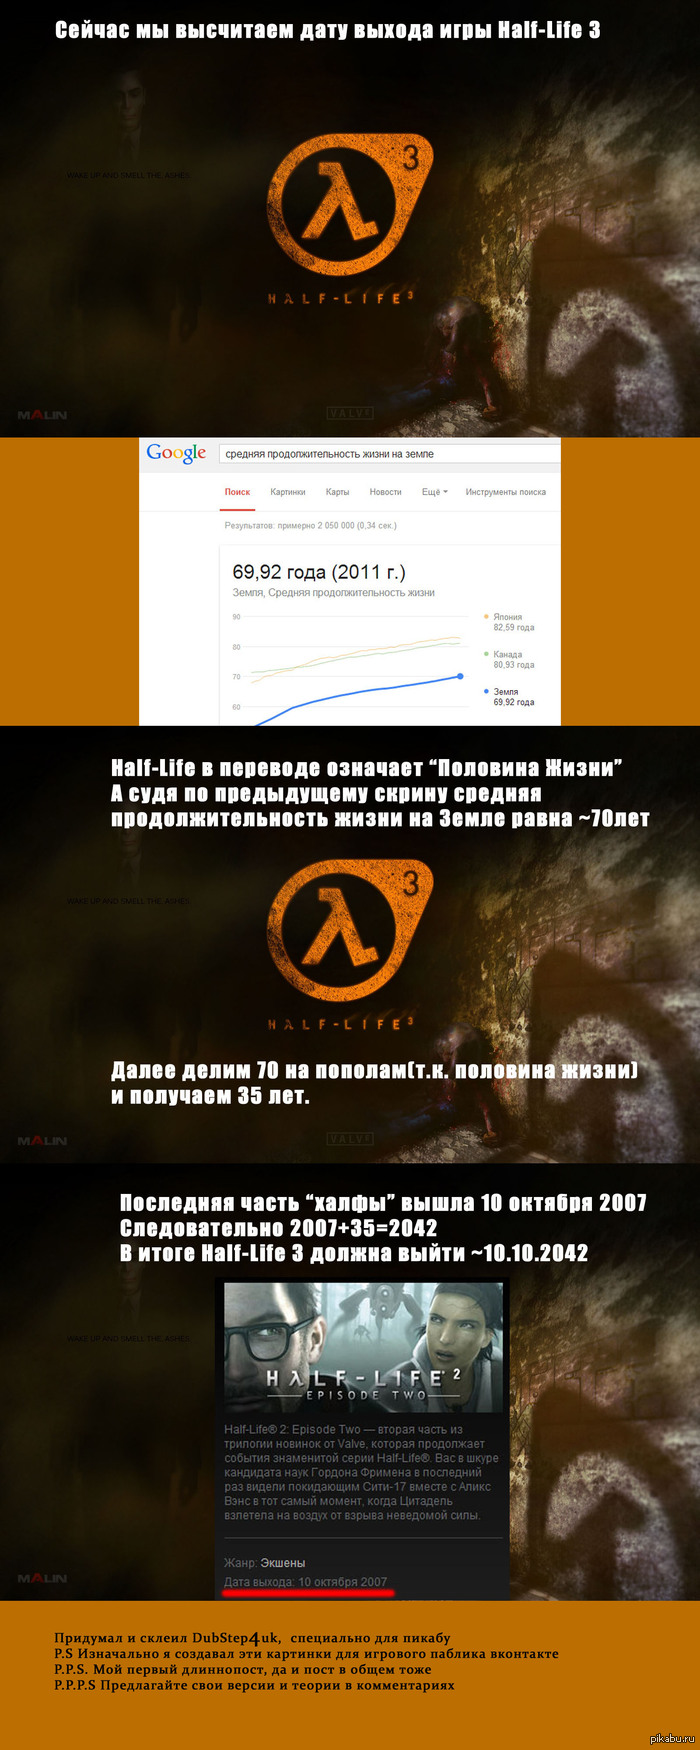        Half-Life 3      